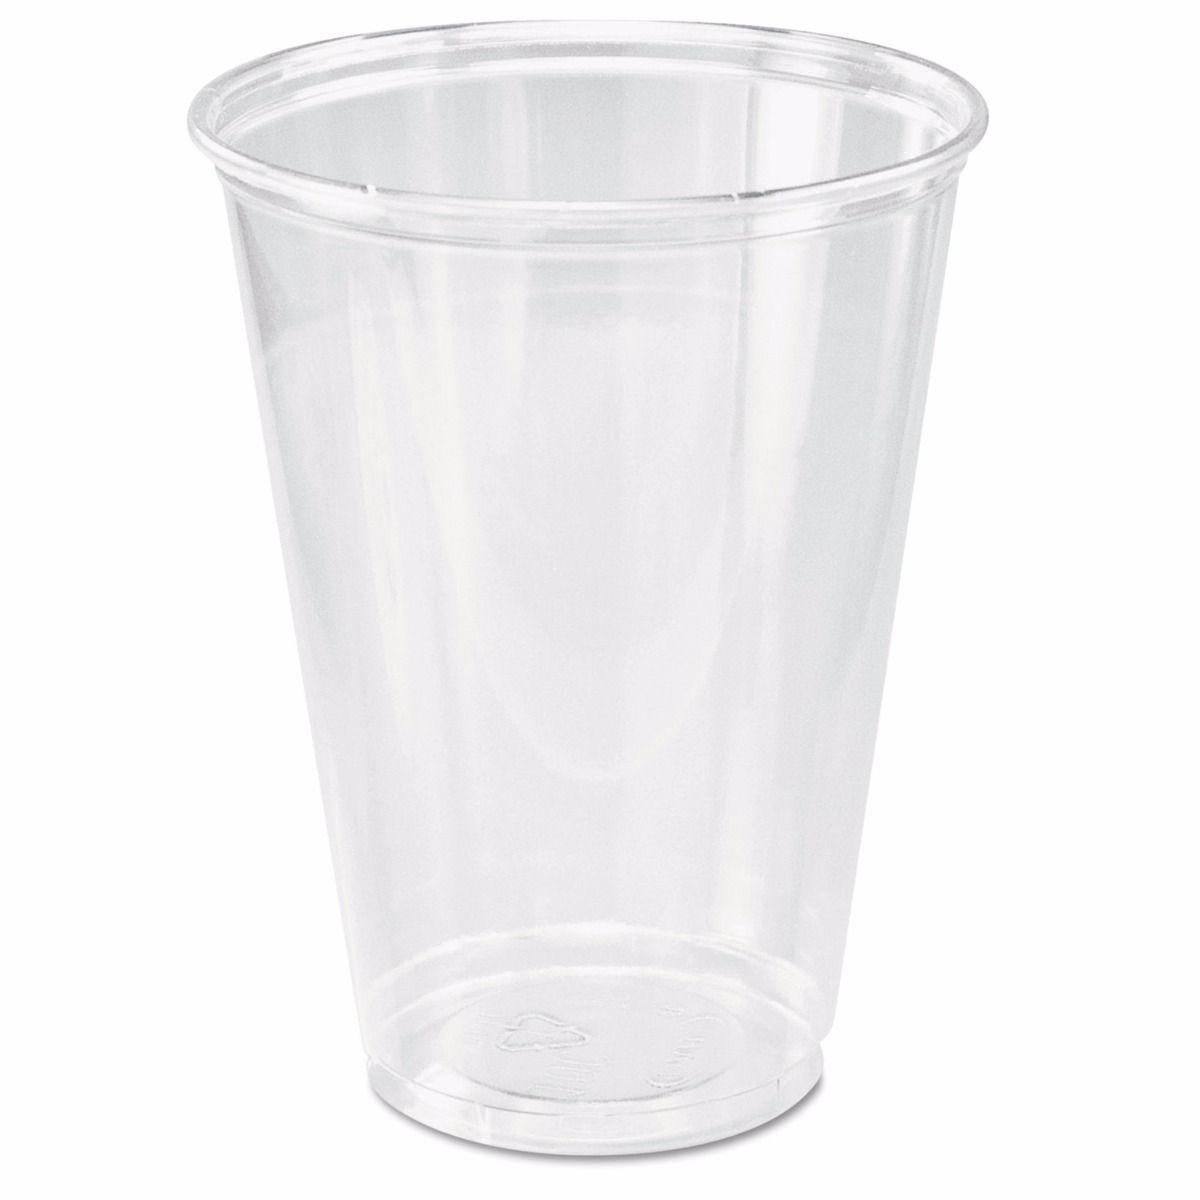 Одноразовый стакан для холодного, 0.4л, d 95мм, h 120мм, прозрачный, шейкер, ПЭТ, 1000 шт